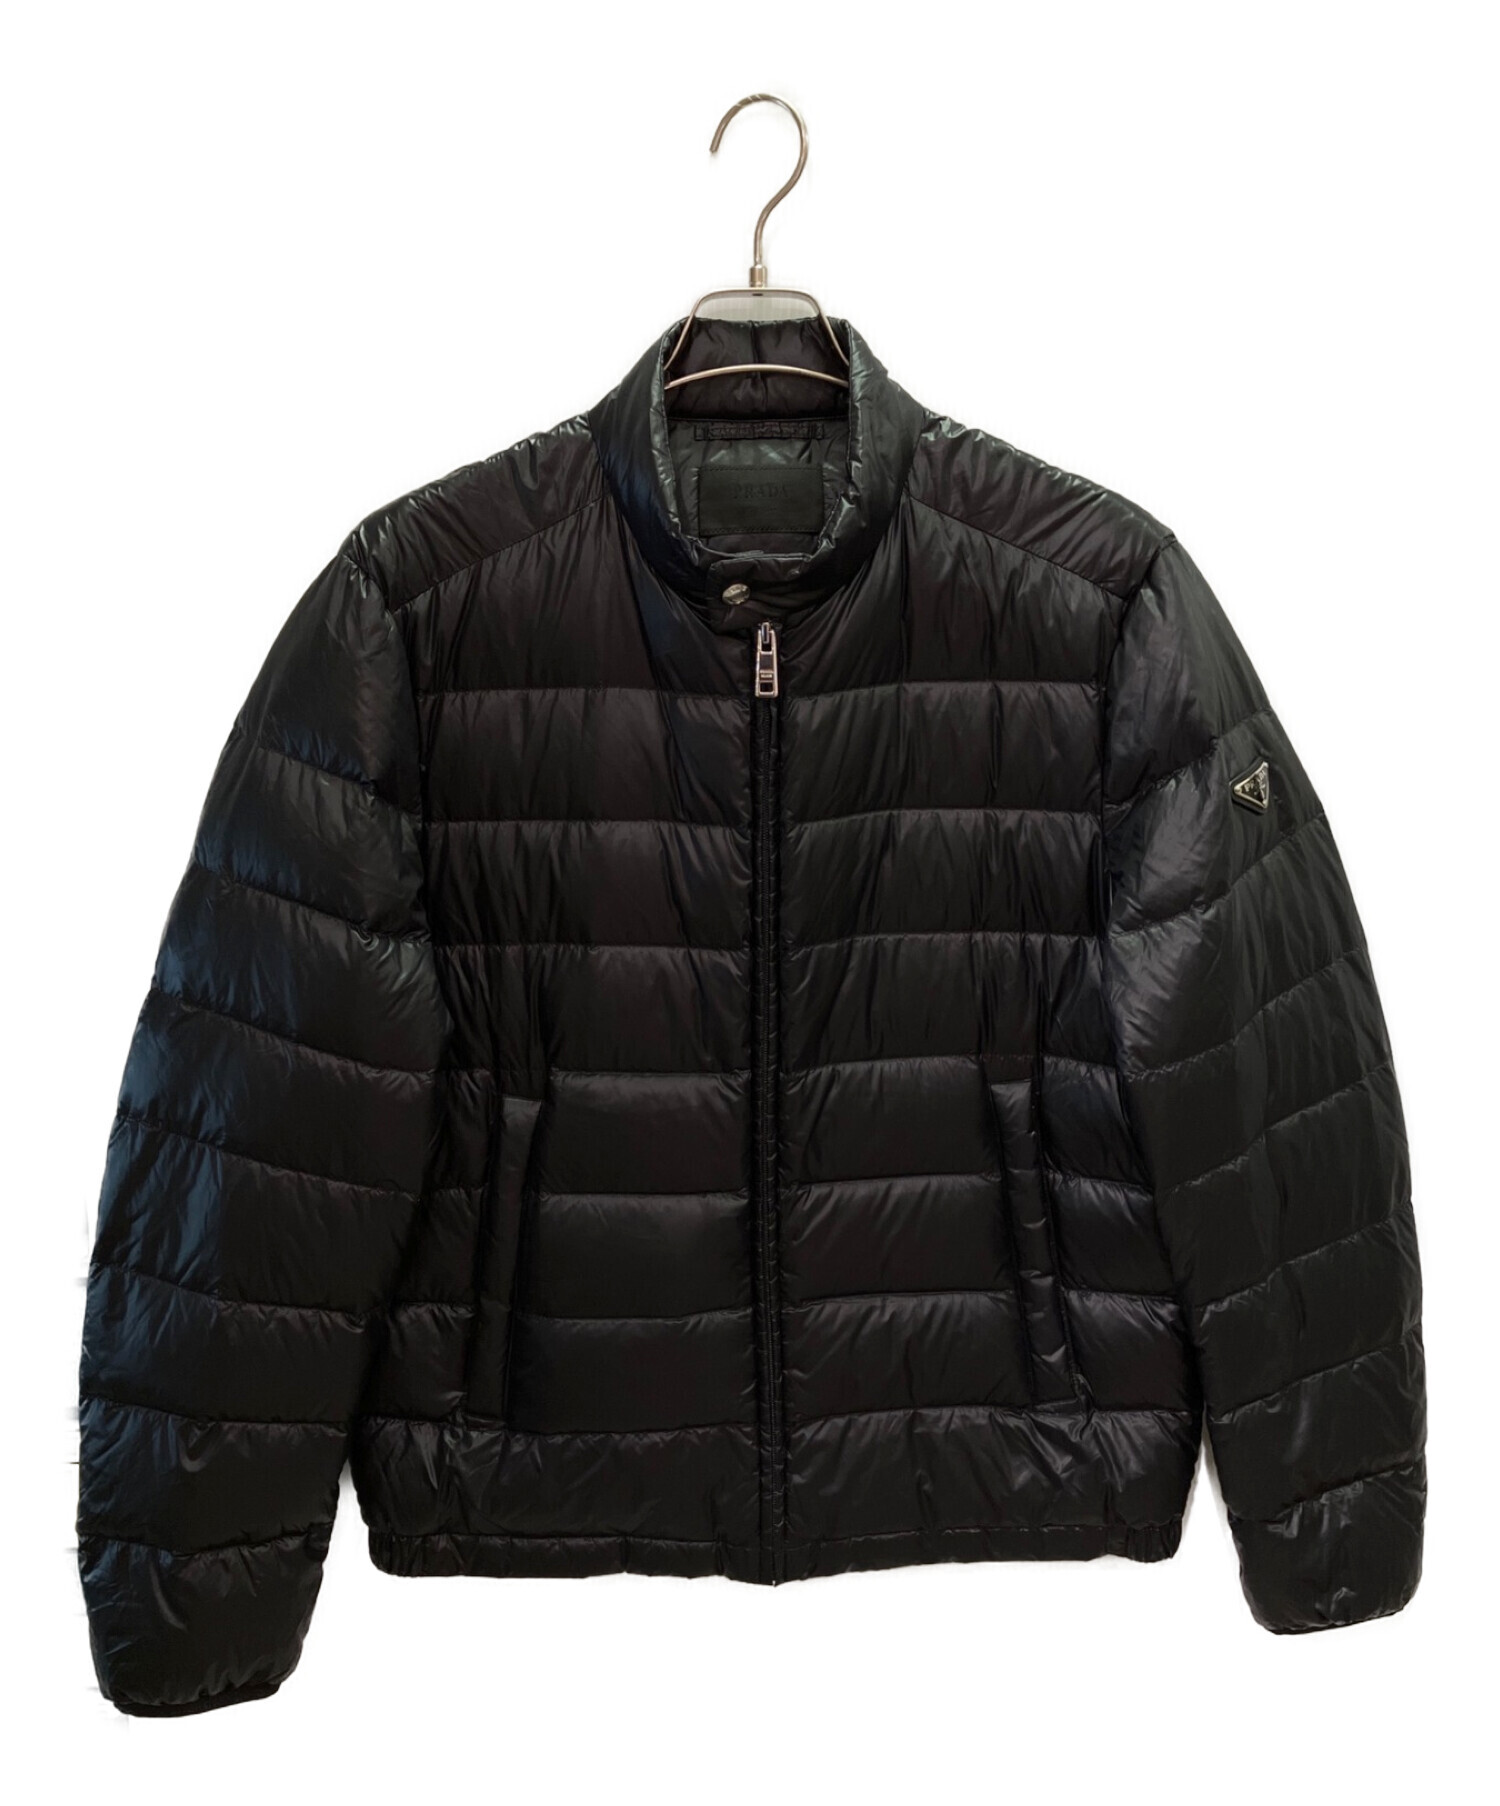 PRADA (プラダ) 袖プレートダウンジャケット ブラック サイズ:50